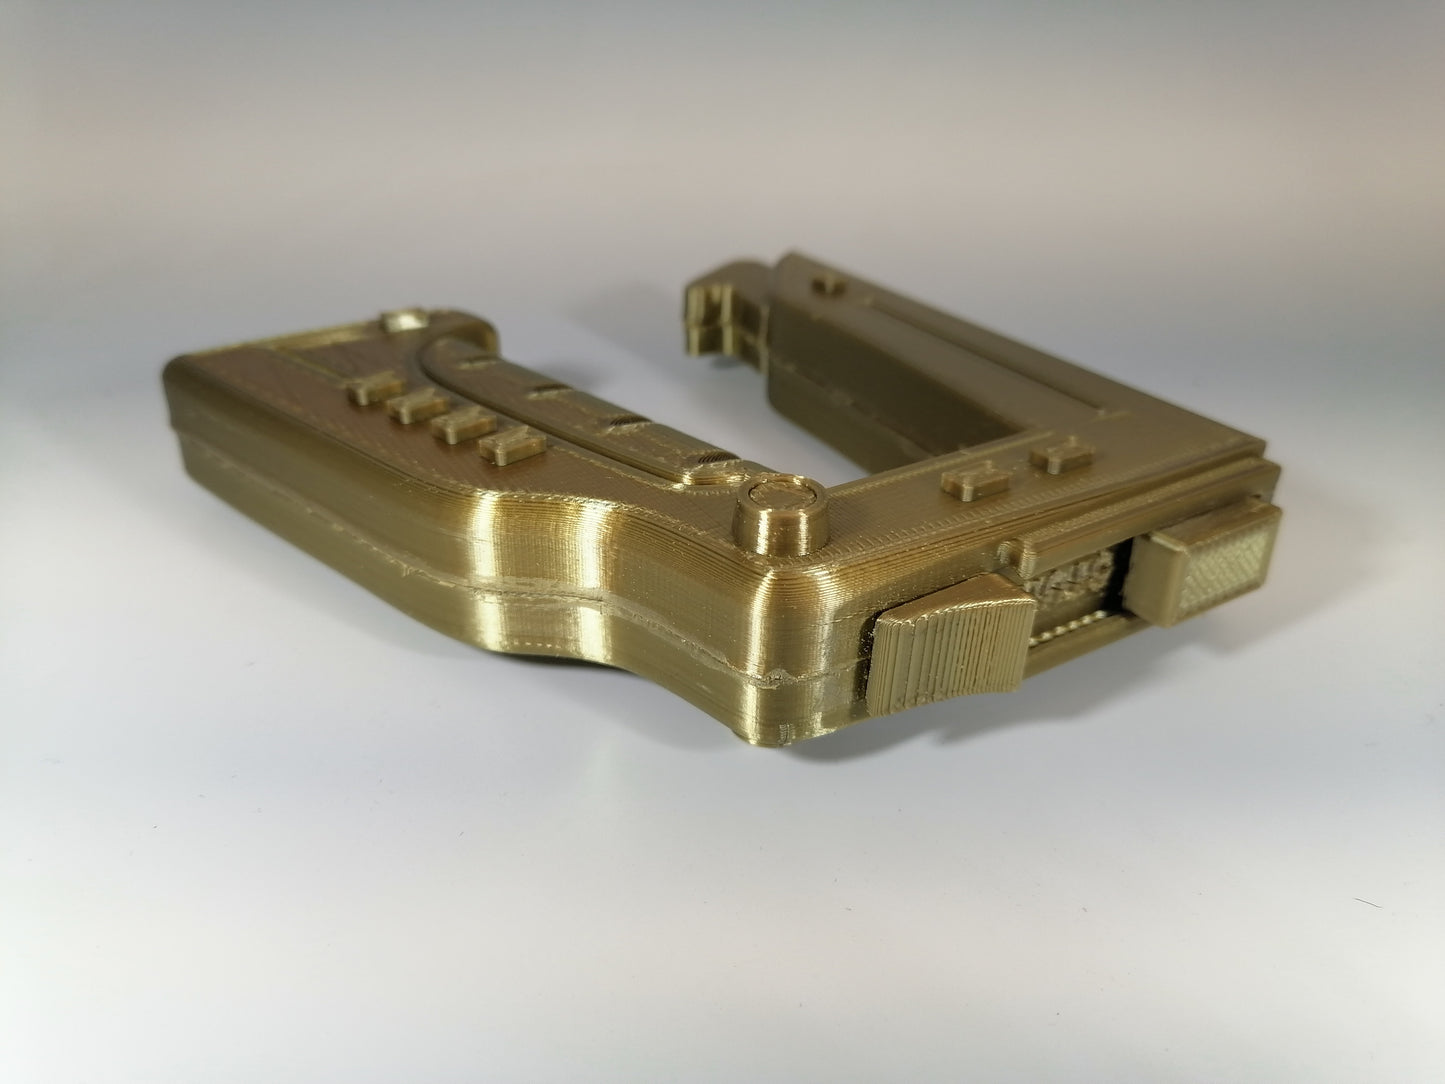 SPACE STUN GUN - GOLD EDITION Sci-Fi Blaster - 3D Printed Replica